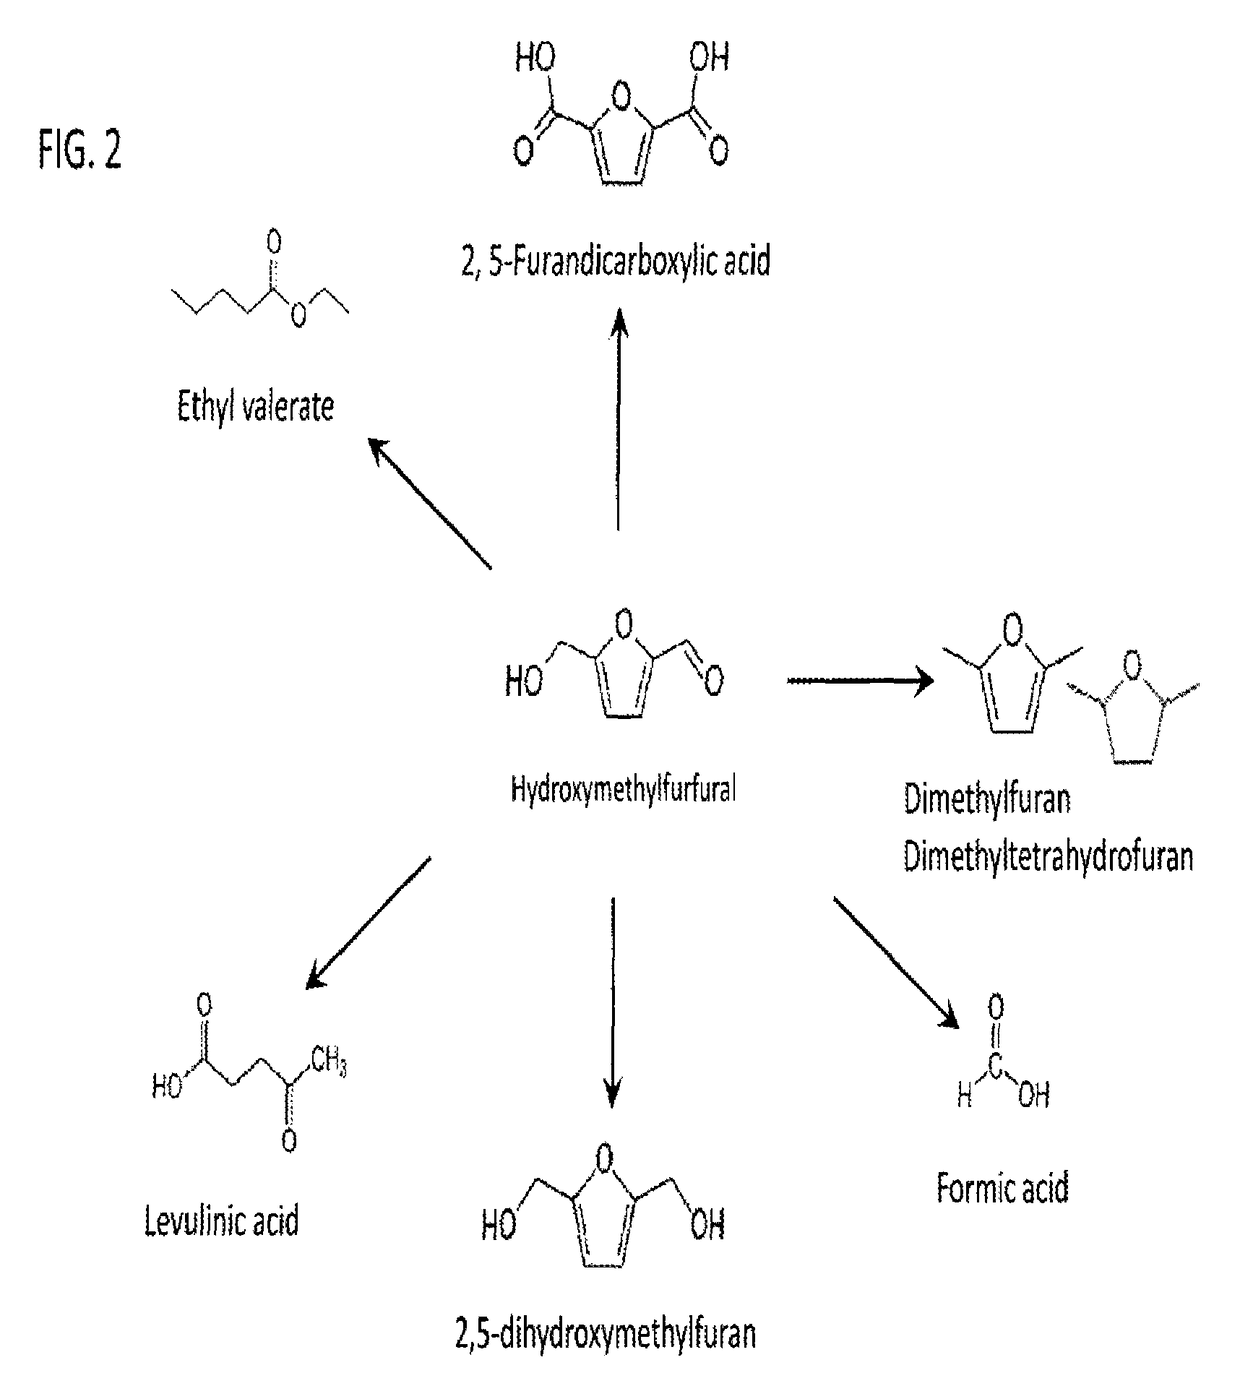 Method to produce furandicarboxylic acid (FDCA) from 5-hydroxymethylfurfural (HMF)